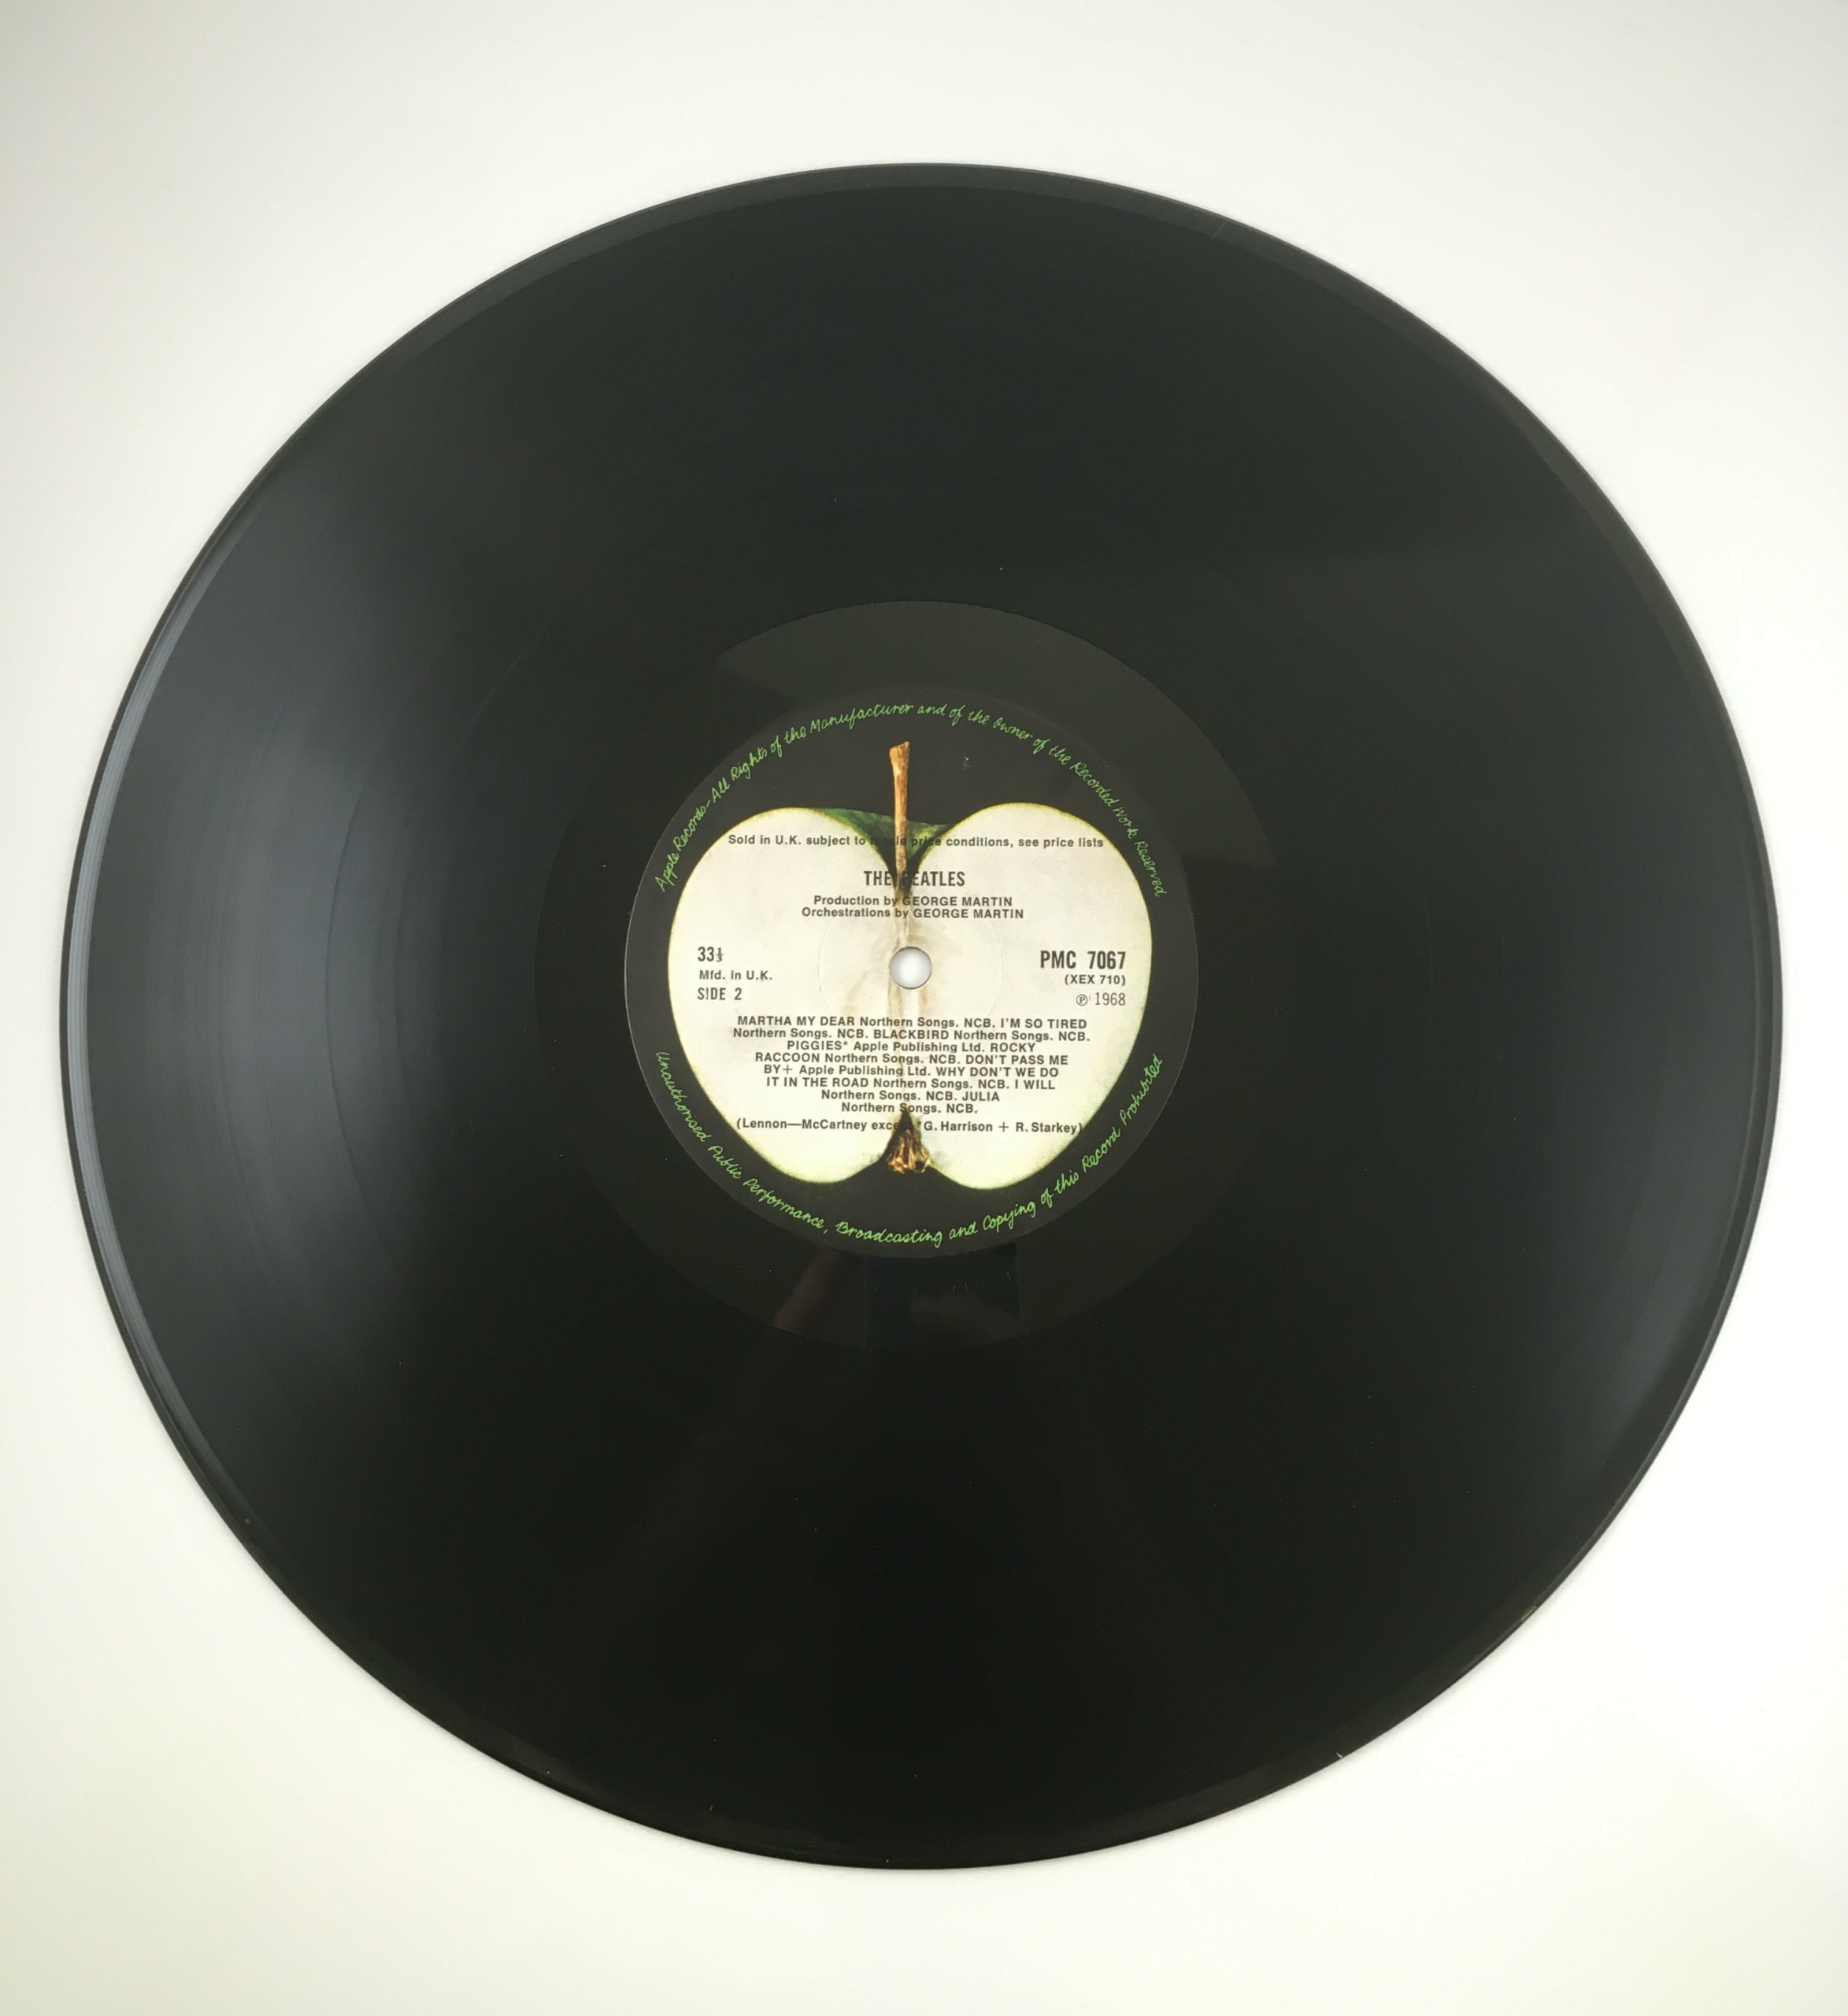 Original The Beatles- White Album (0005096) Early Pressing Vinyl Record